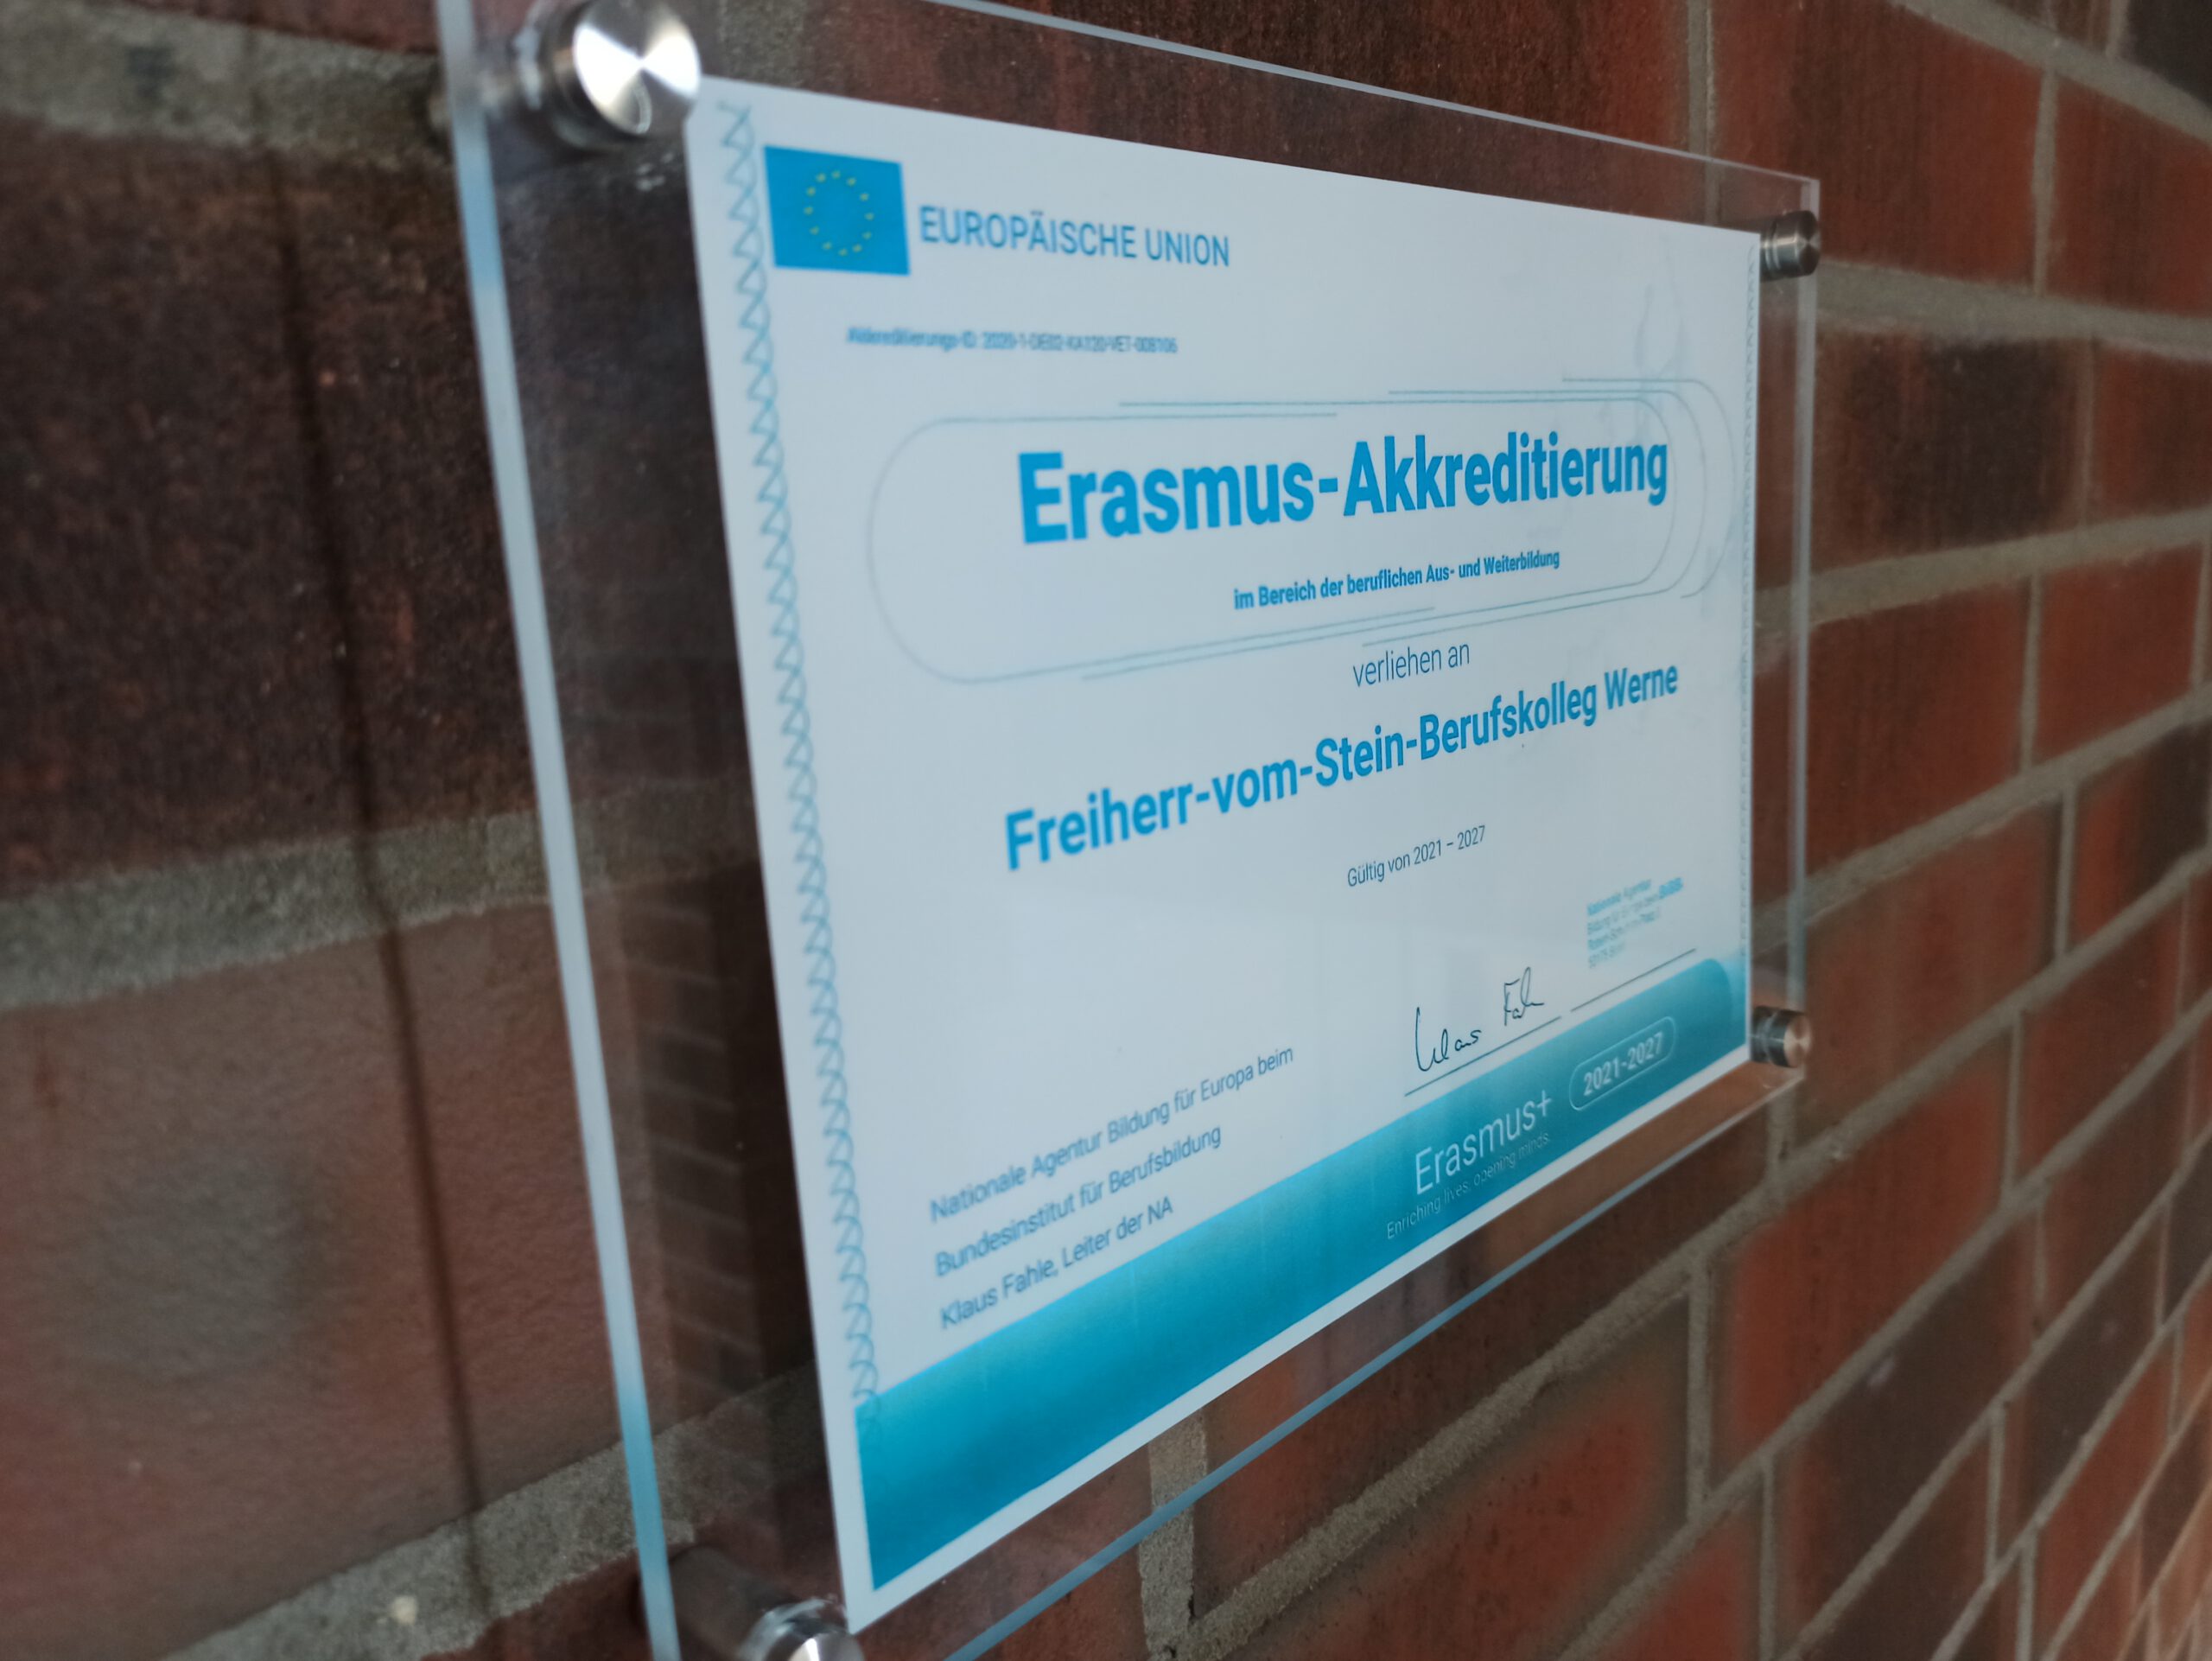 Erasmus+ – Akkreditierung gelungen.